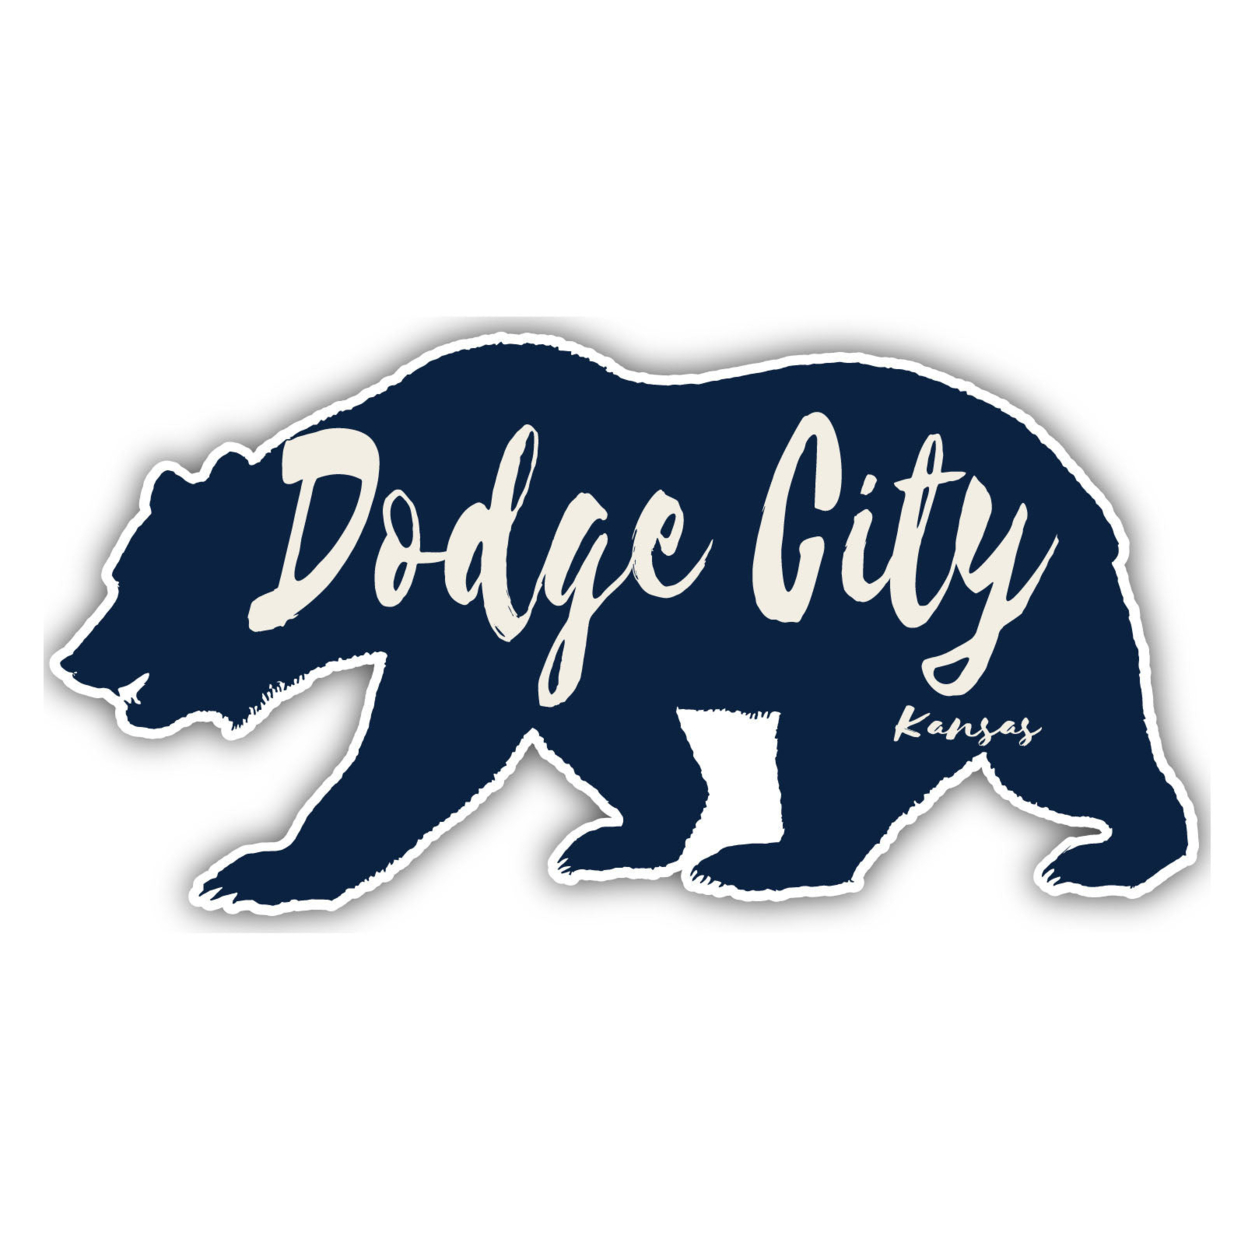 Dodge City Kansas Souvenir Decorative Stickers (Choose Theme And Size) - Single Unit, 8-Inch, Adventures Awaits